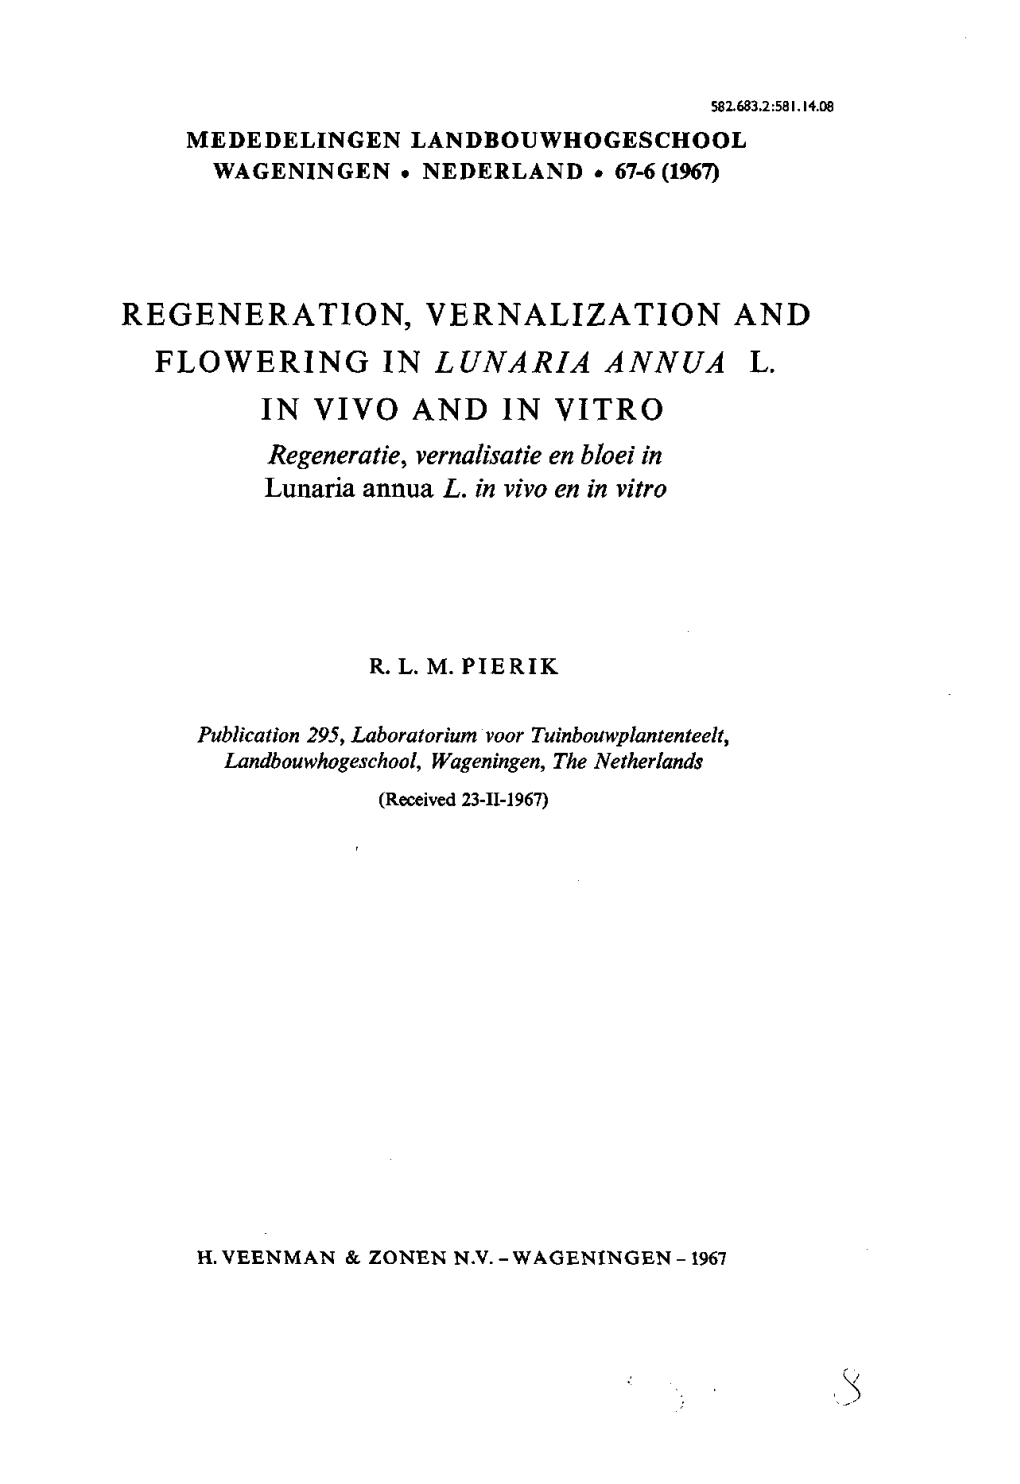 REGENERATION, VERNALIZATION and FLOWERING in LUNARIA ANNUA L. in VIVO and in VITRO Regeneratie, Vernalisatie Enbloei in Lunaria Annua L